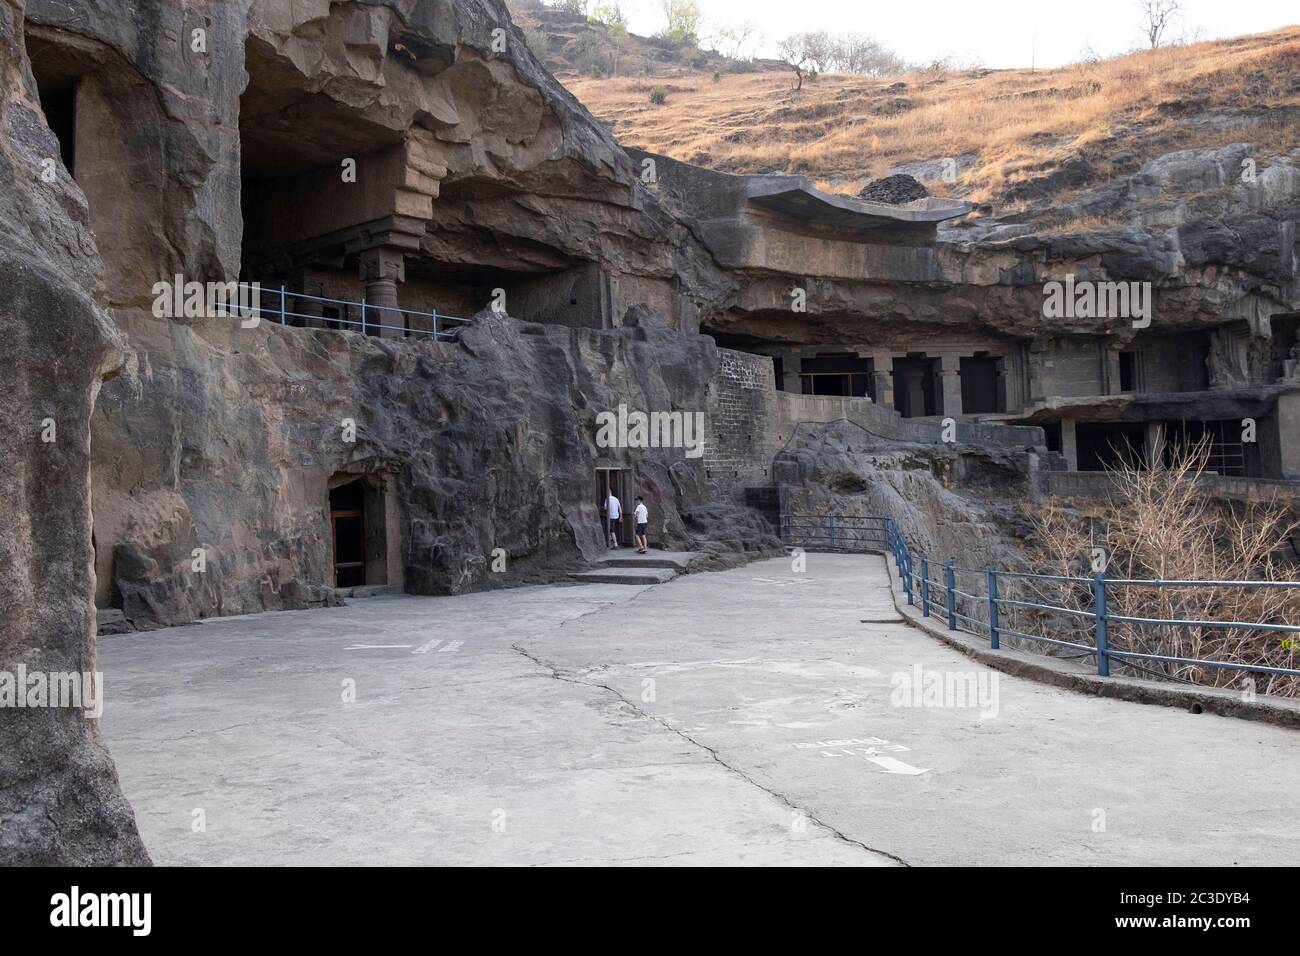 Facade of ancient Ellora rock carved Buddhist temple caves, Aurangabad, Maharashtra, India. Stock Photo